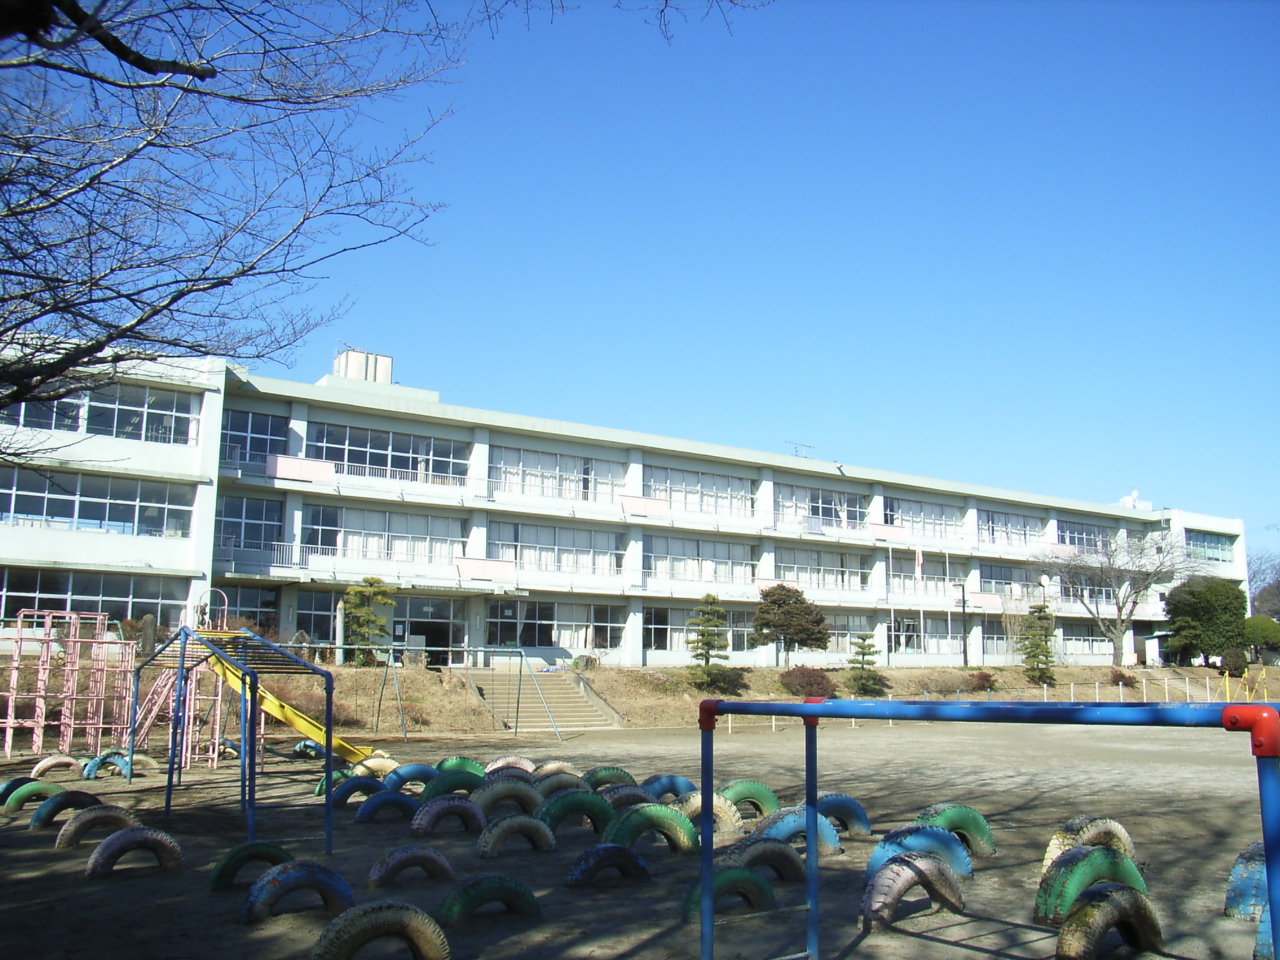 Primary school. 750m until the nephew ball Municipal Ogawa Elementary School (elementary school)